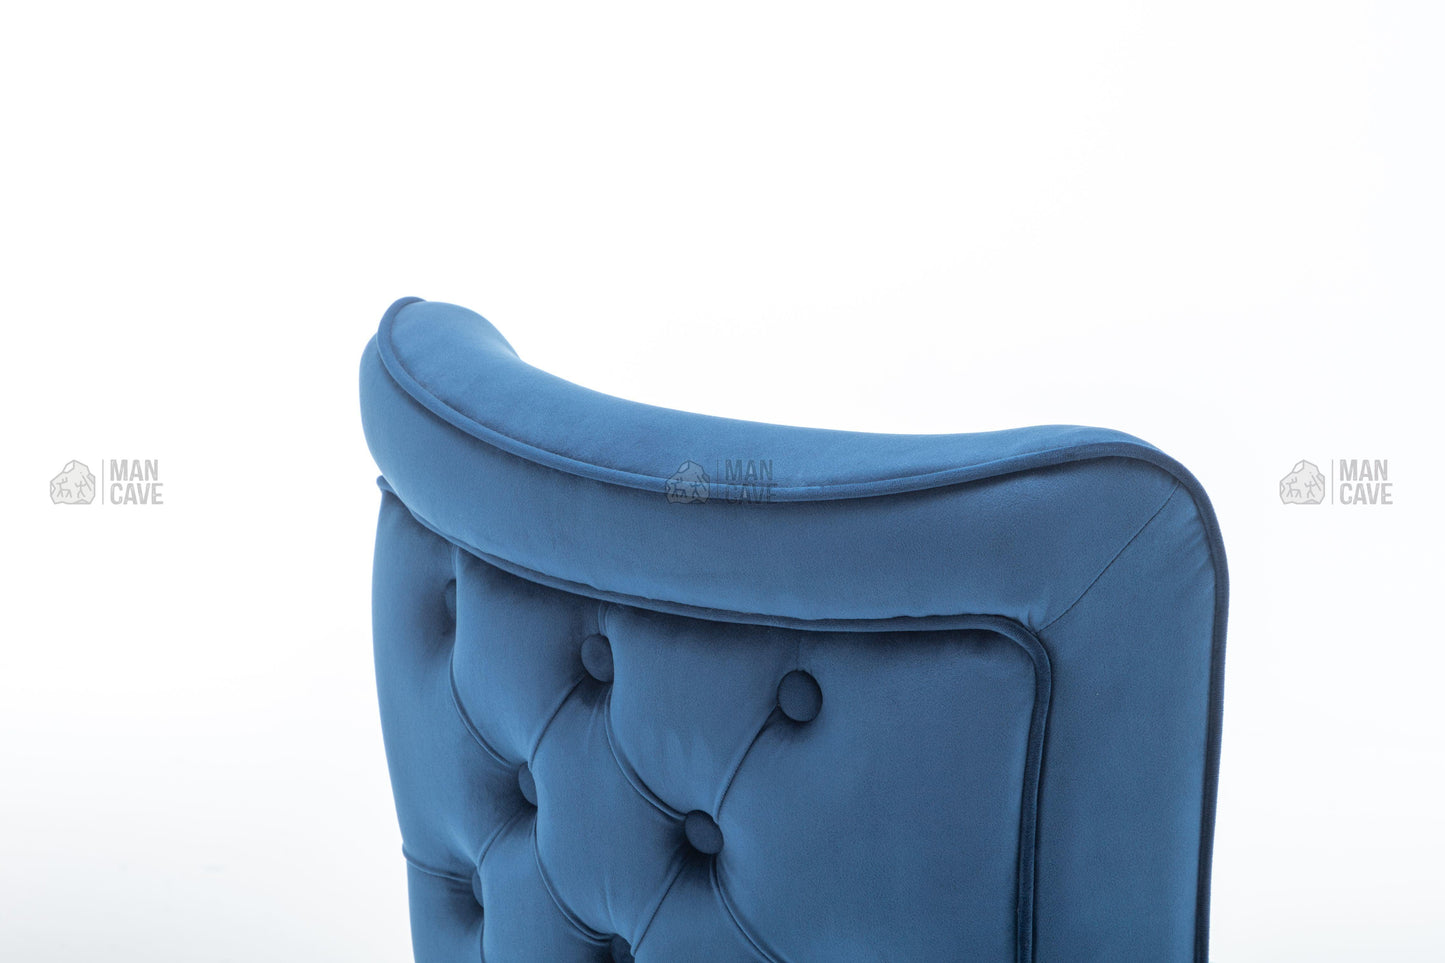 Belgravia Dining Chair - Blue - mancavesuperstore